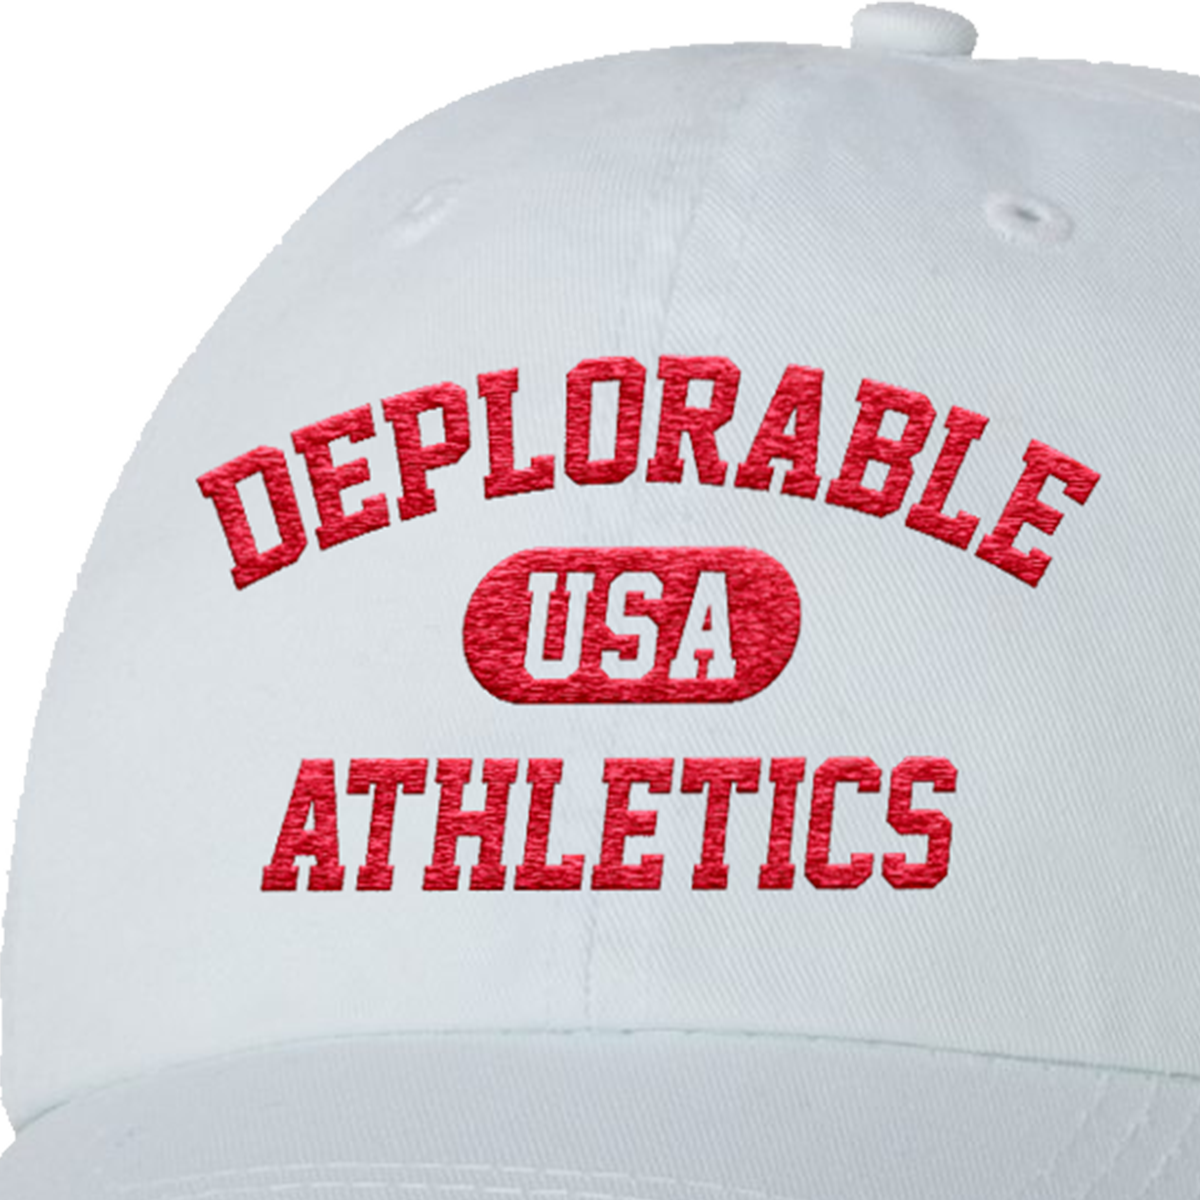 Deplorable Athletics Hat - White